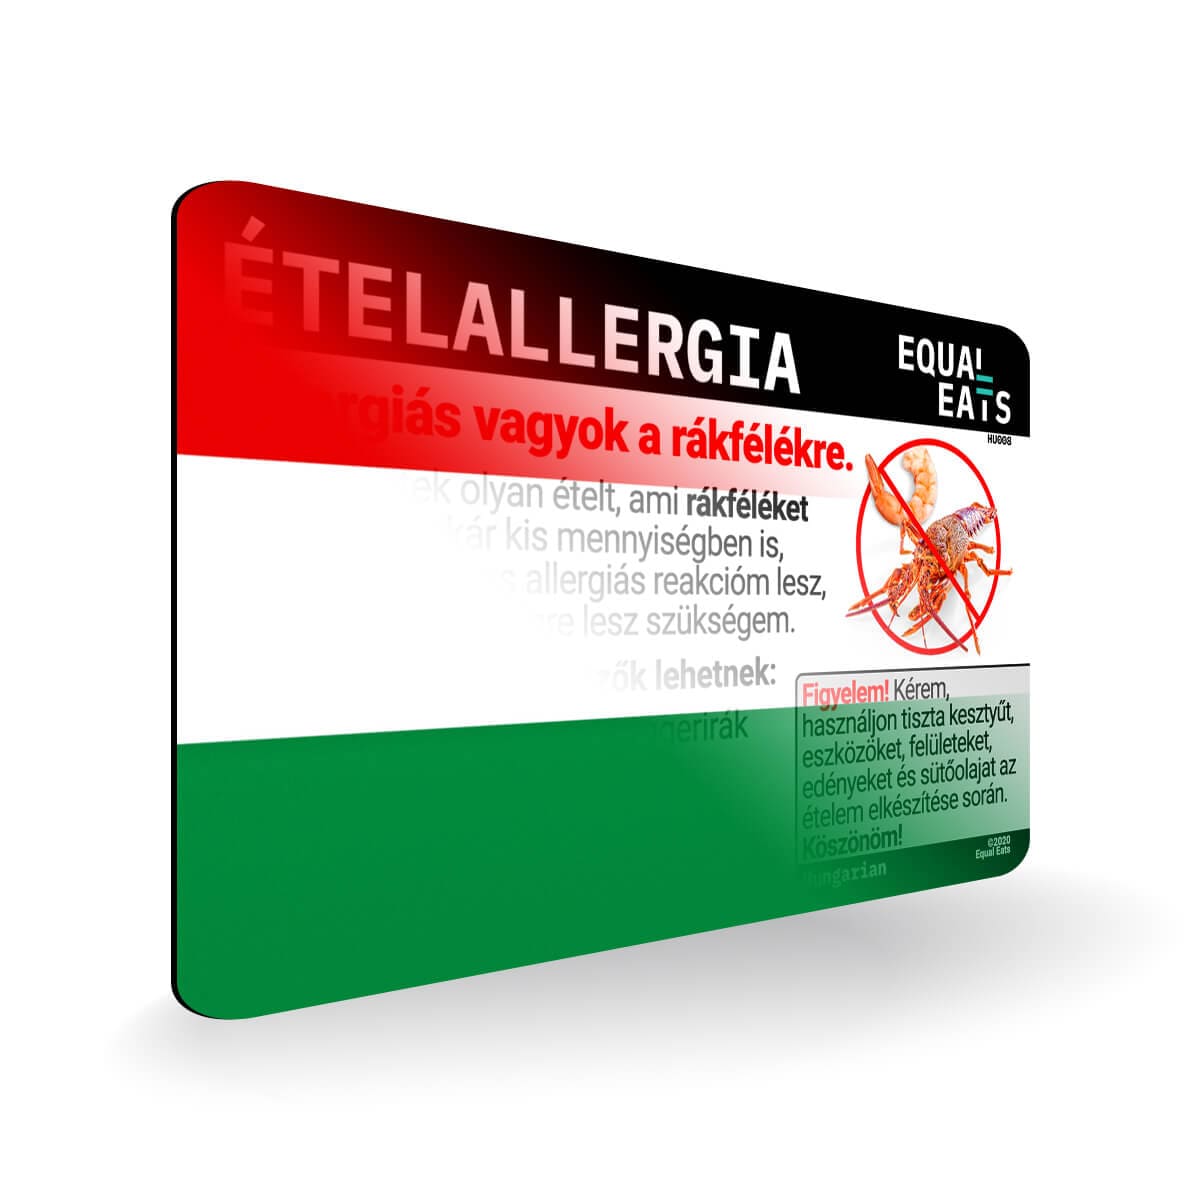 Crustacean Allergy in Hungarian. Crustacean Allergy Card for Hungary